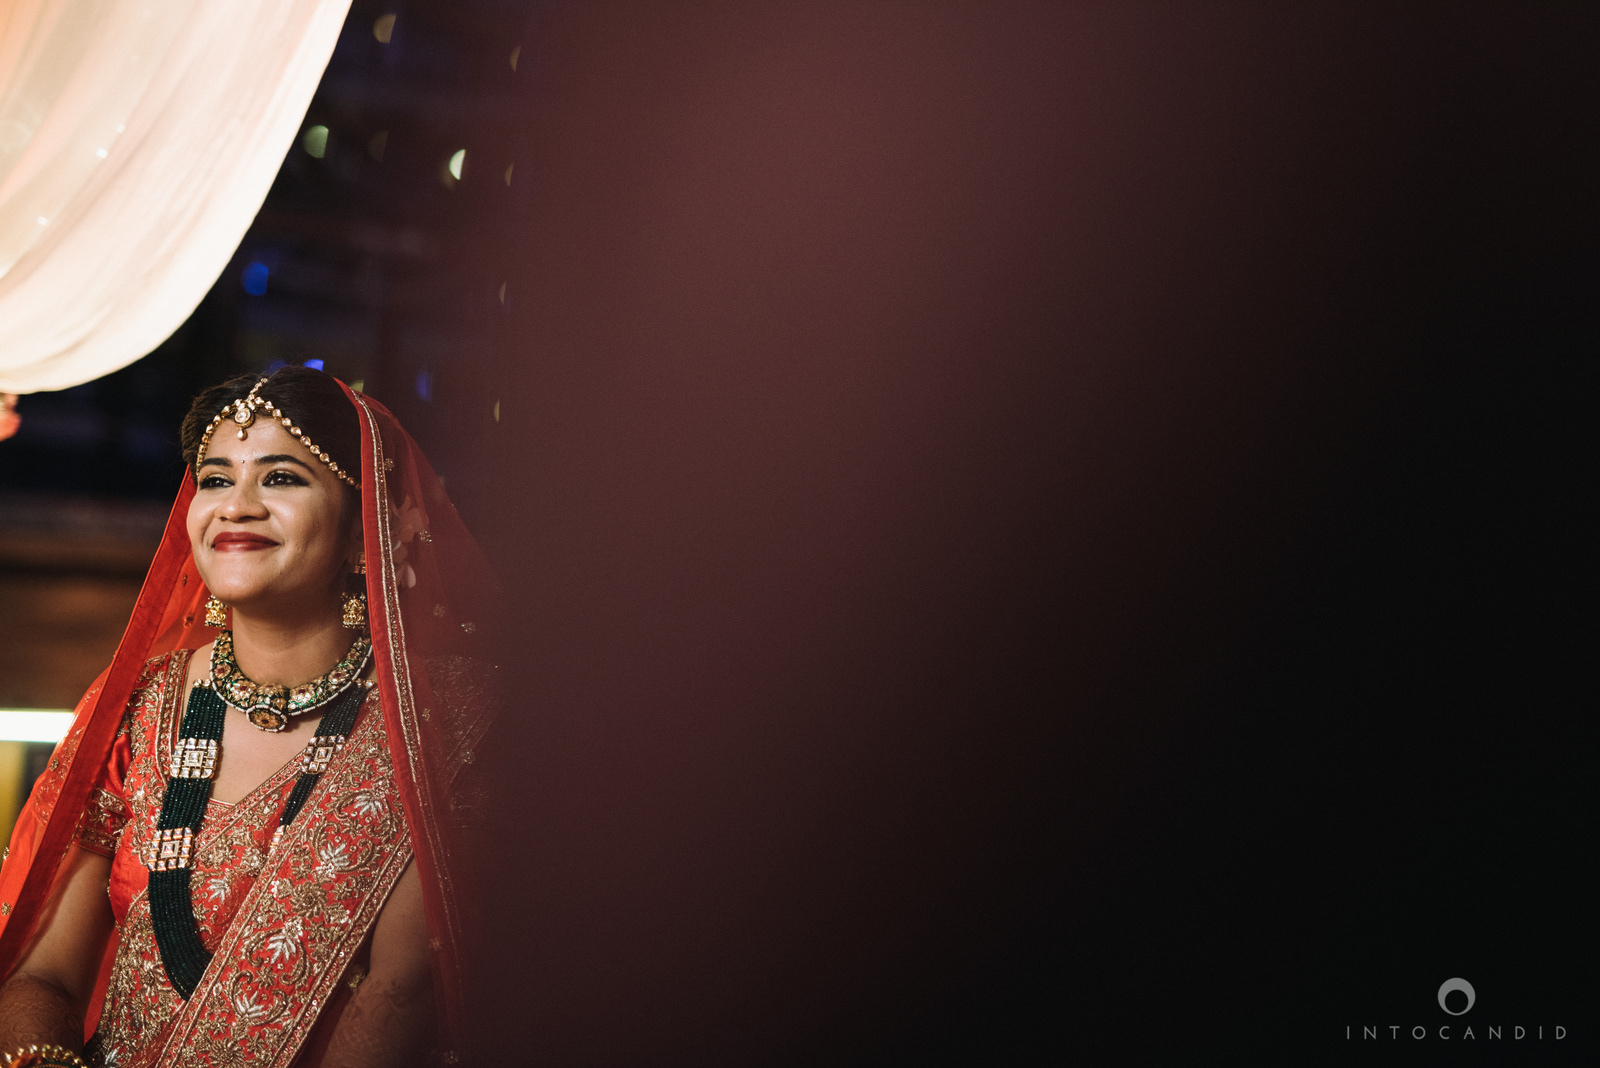 mumbai_wedding_photographer_intocandid_saharastar_ketan_manasvi_ts_026.jpg